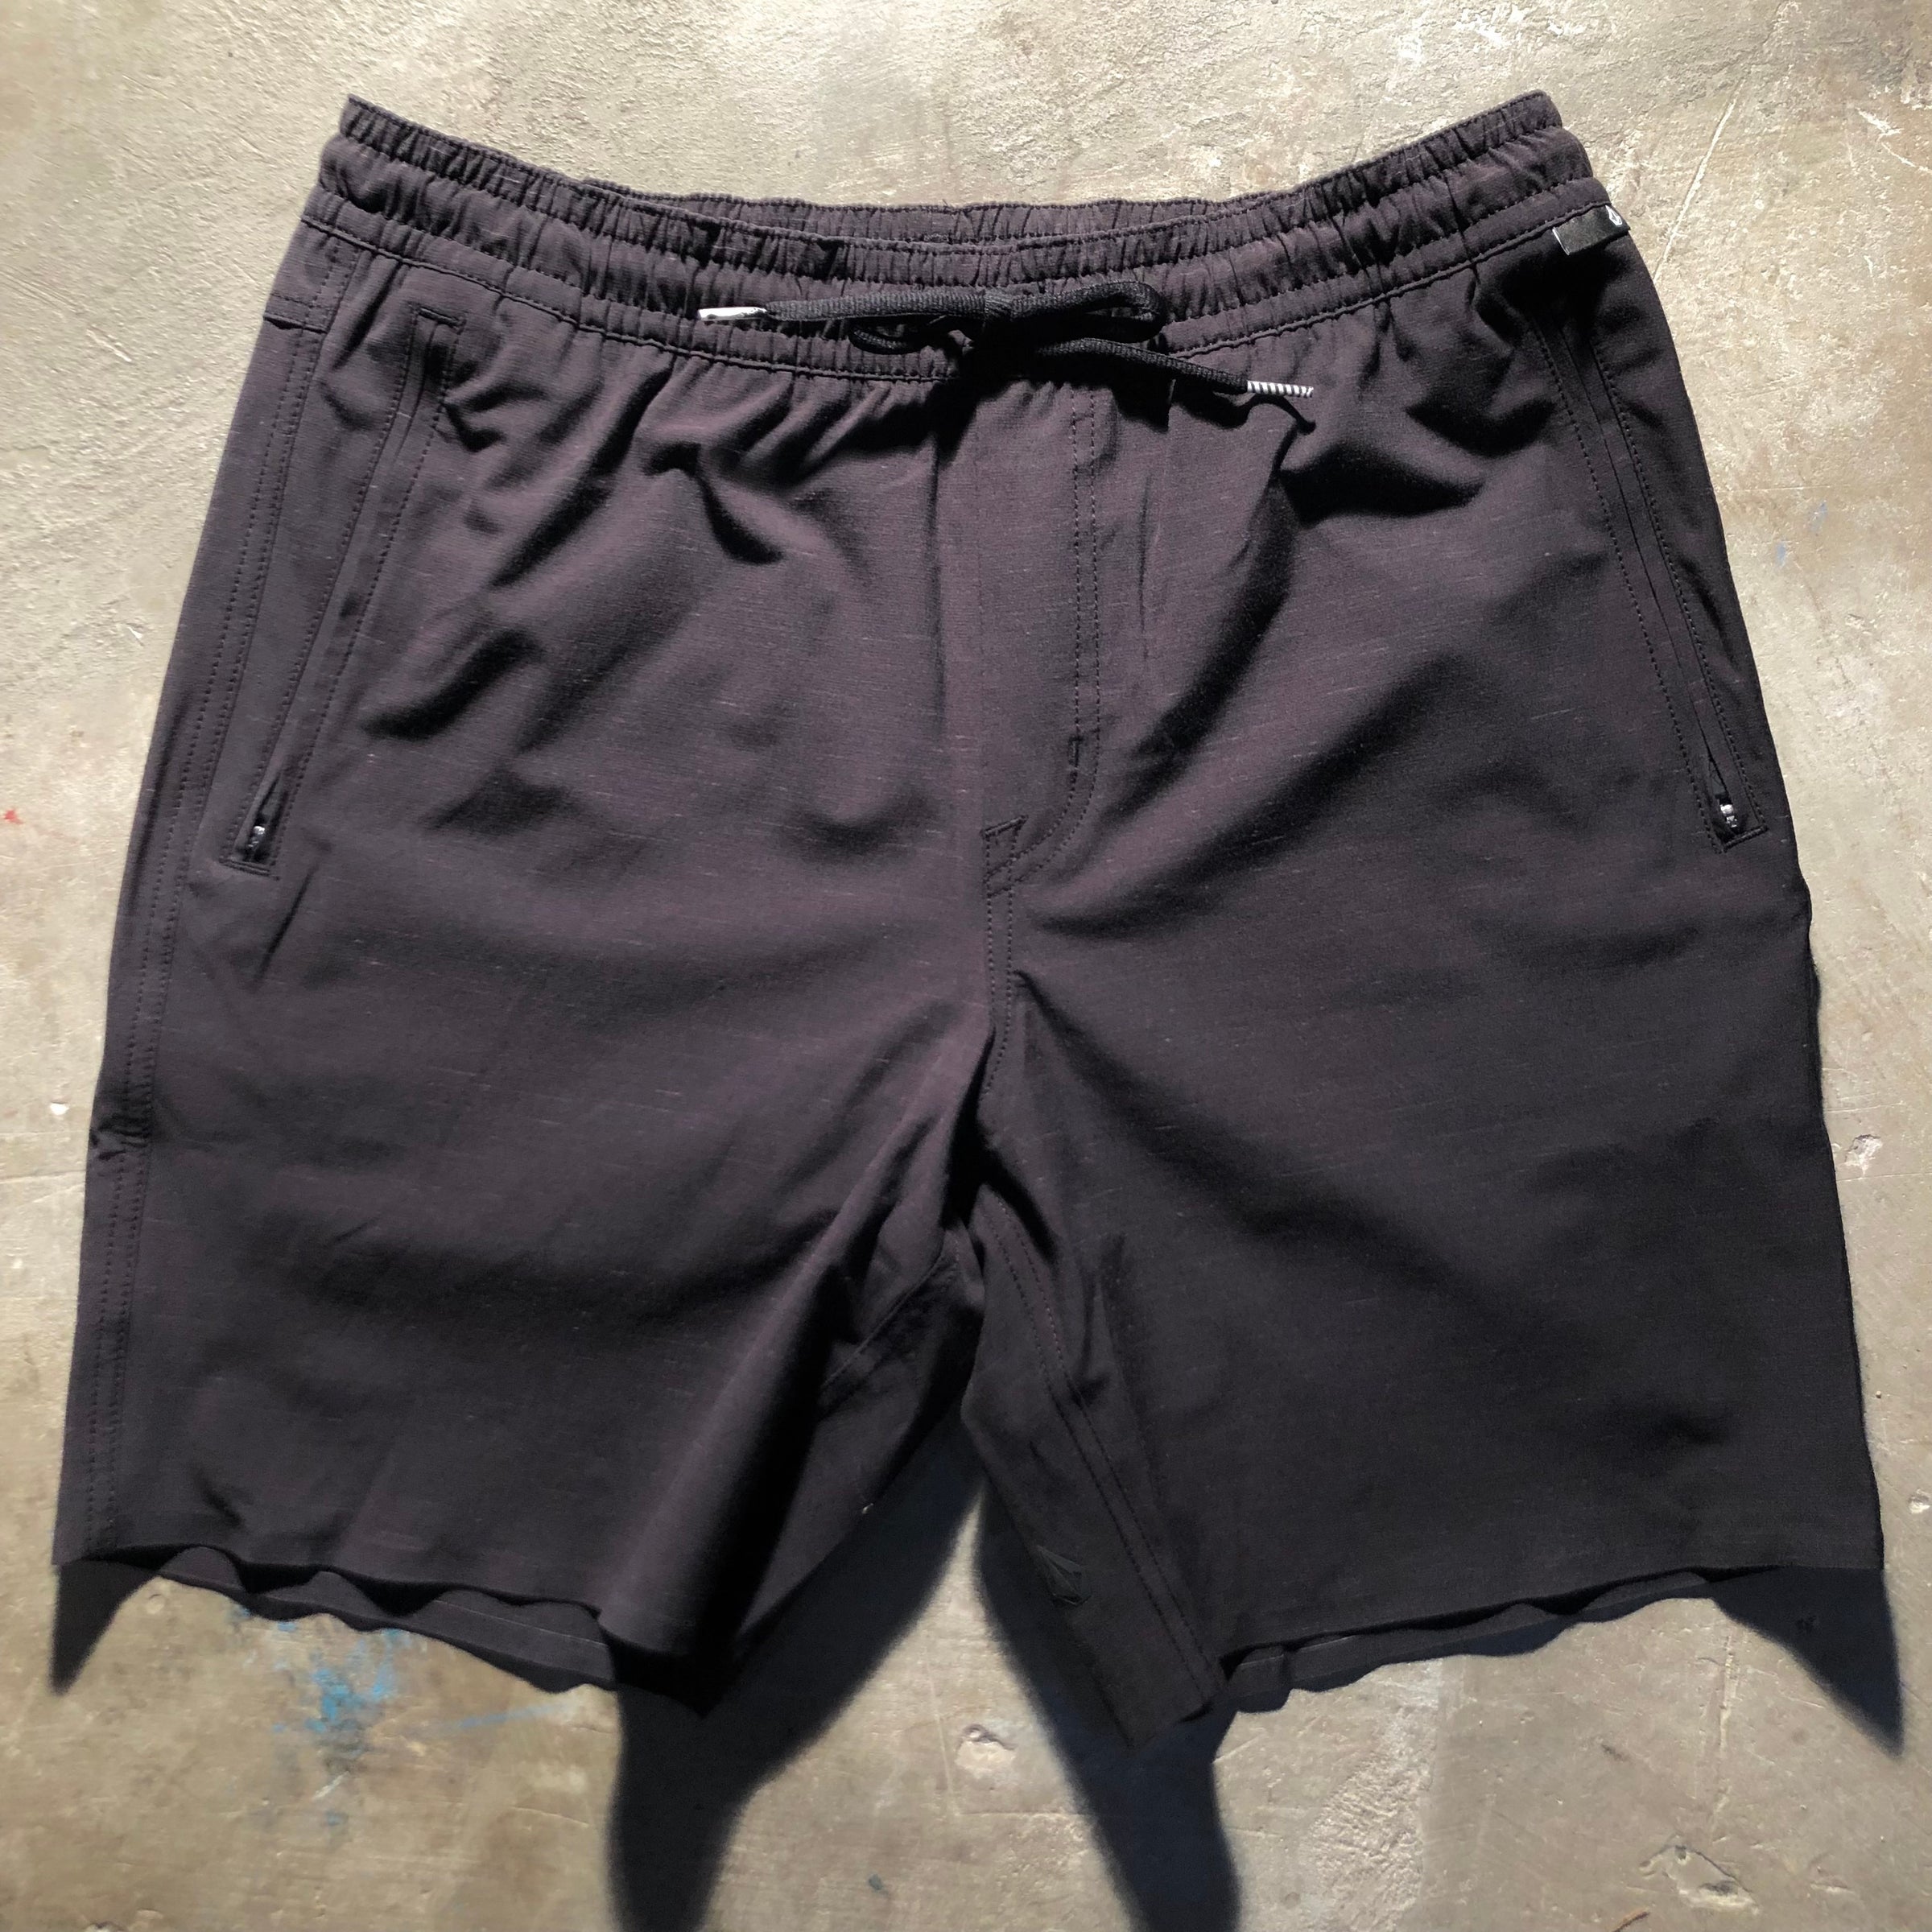 Volcom - Wrecpack Hybrid Shorts - Black - Size Large | The Block